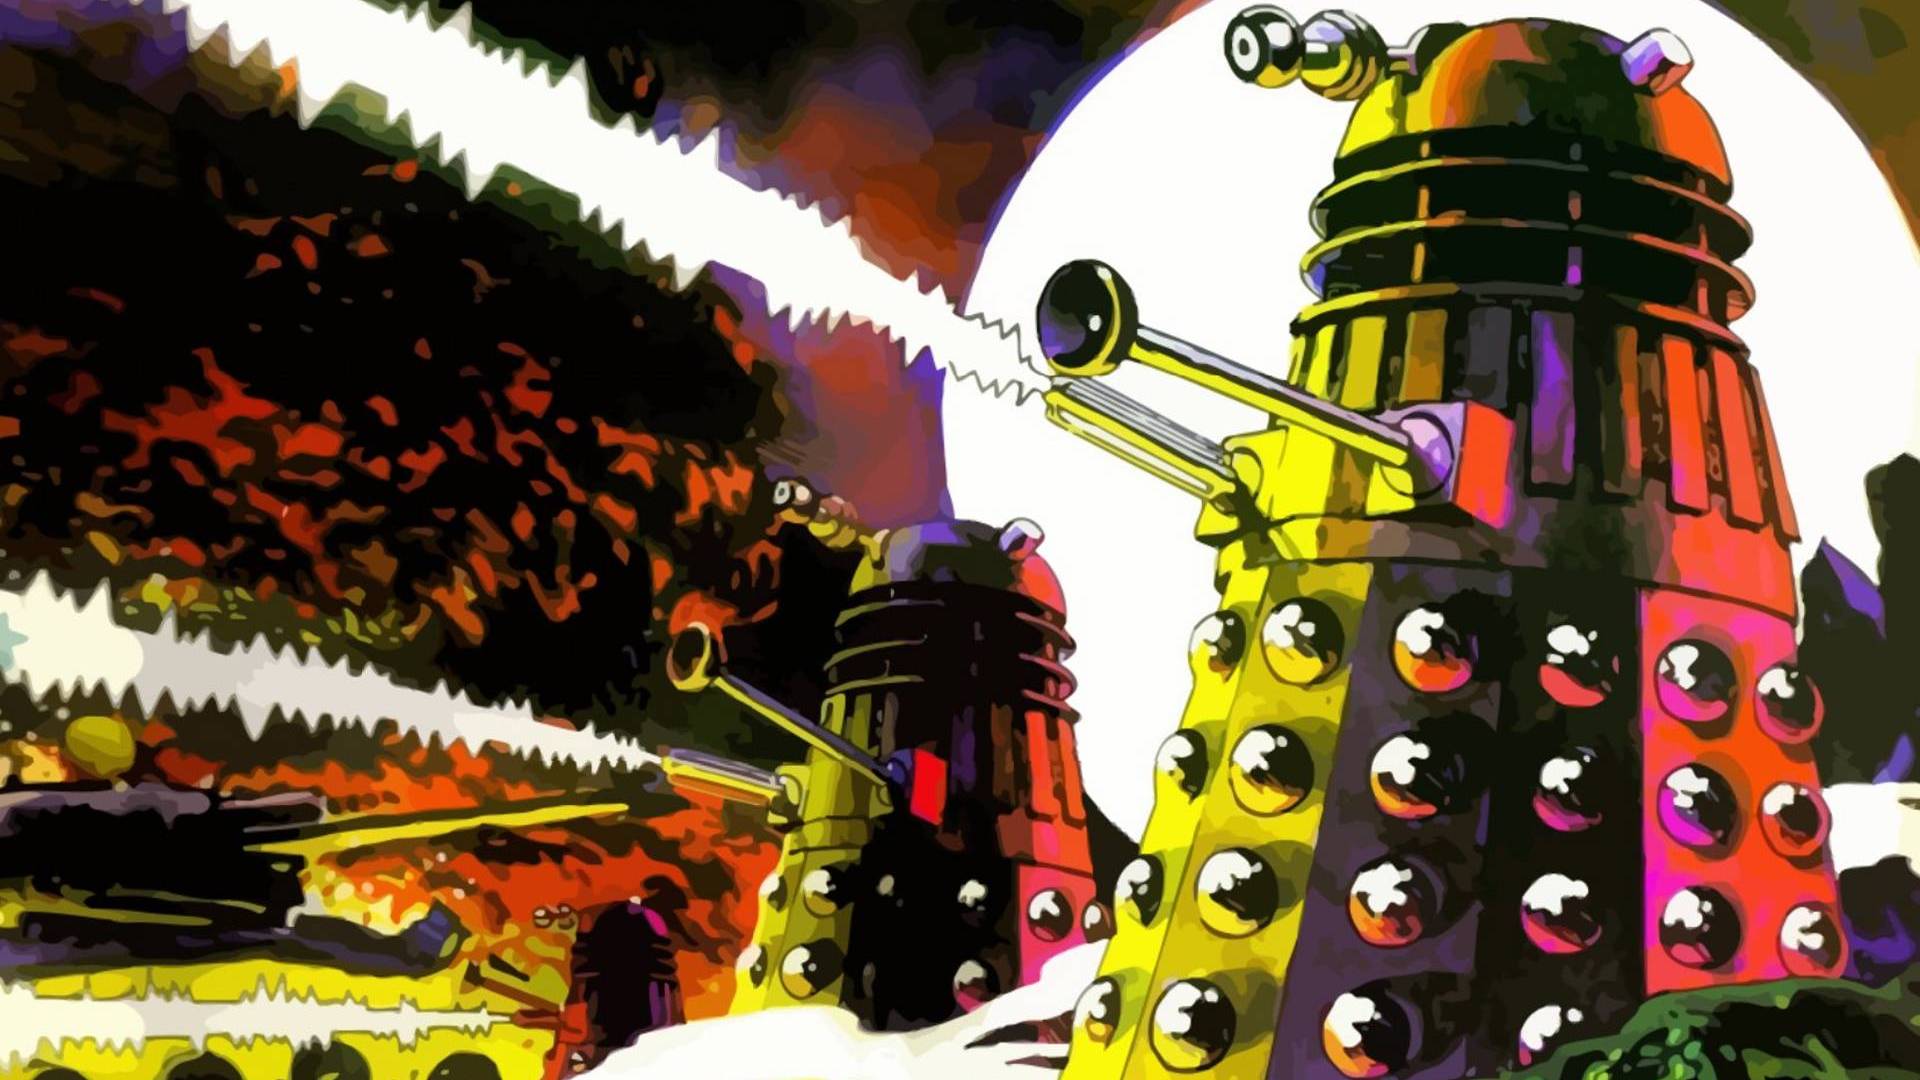 General 1920x1080 Doctor Who Daleks science fiction TV series digital art